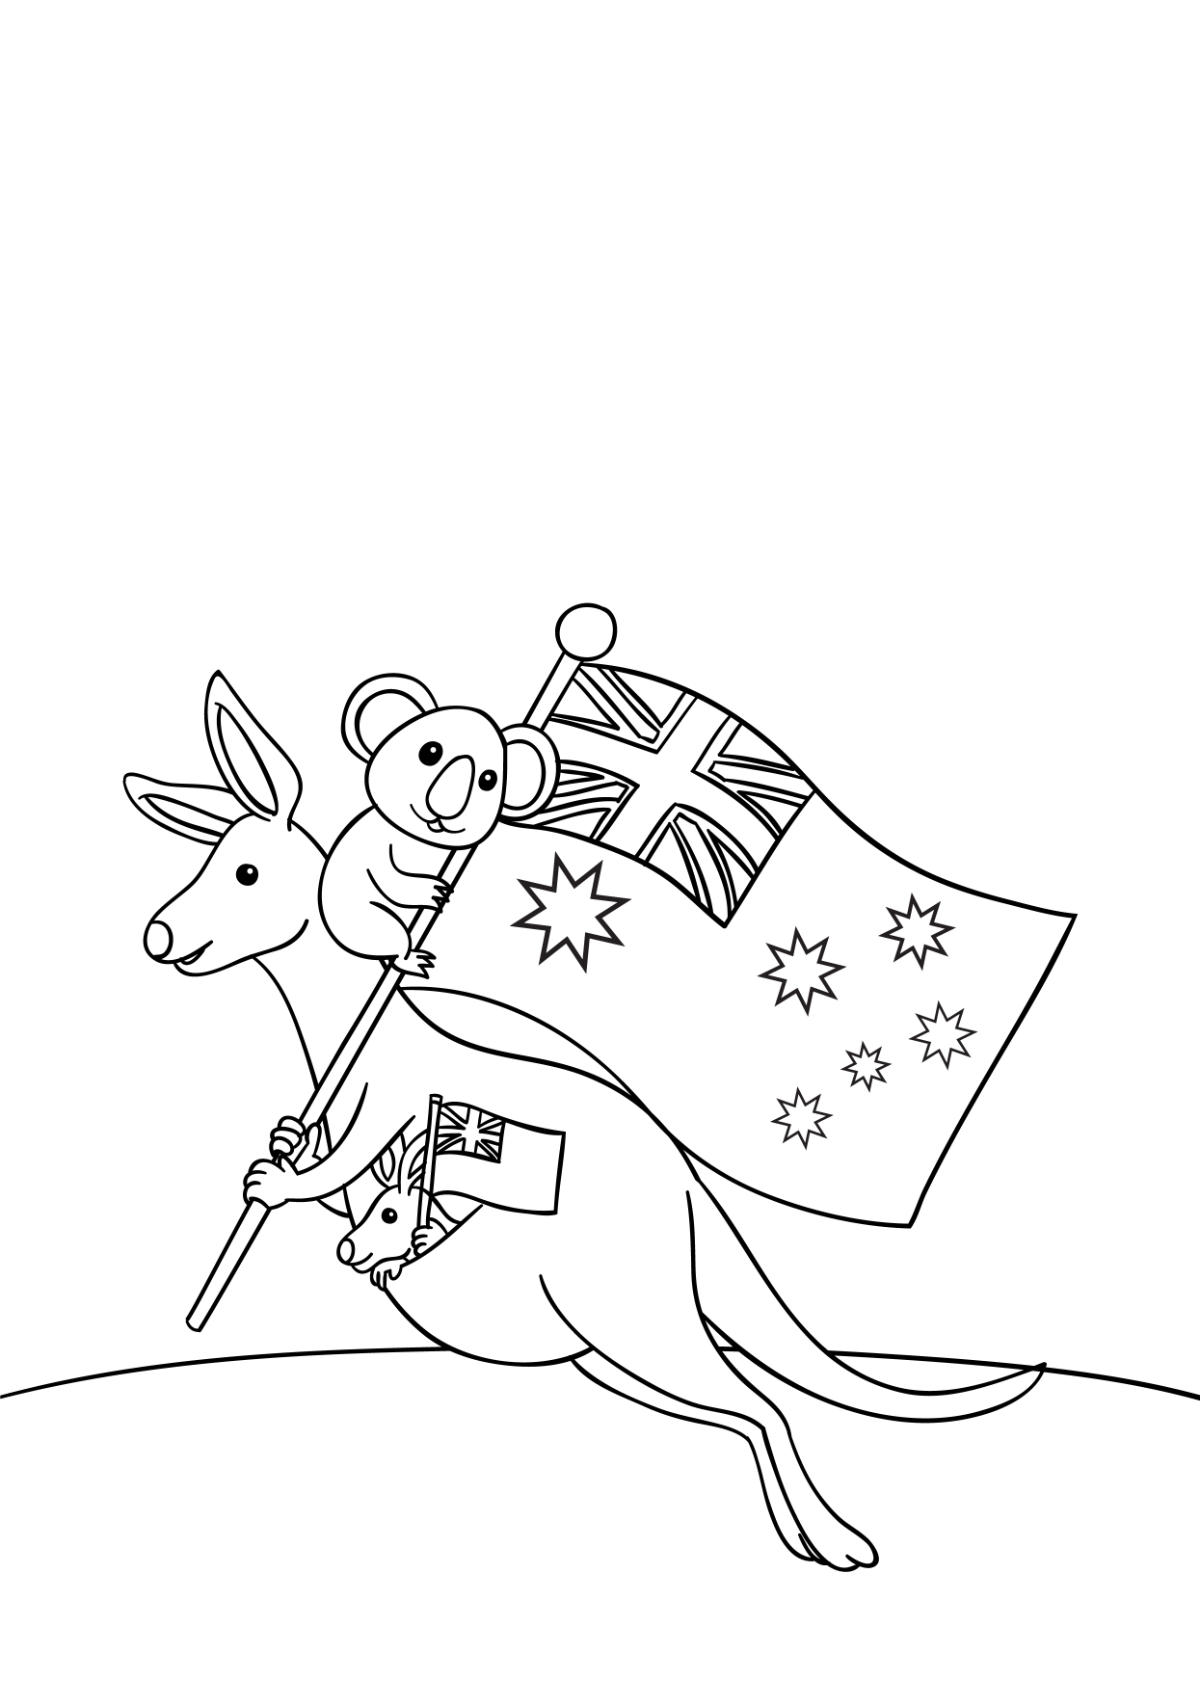 Australia Day Drawing